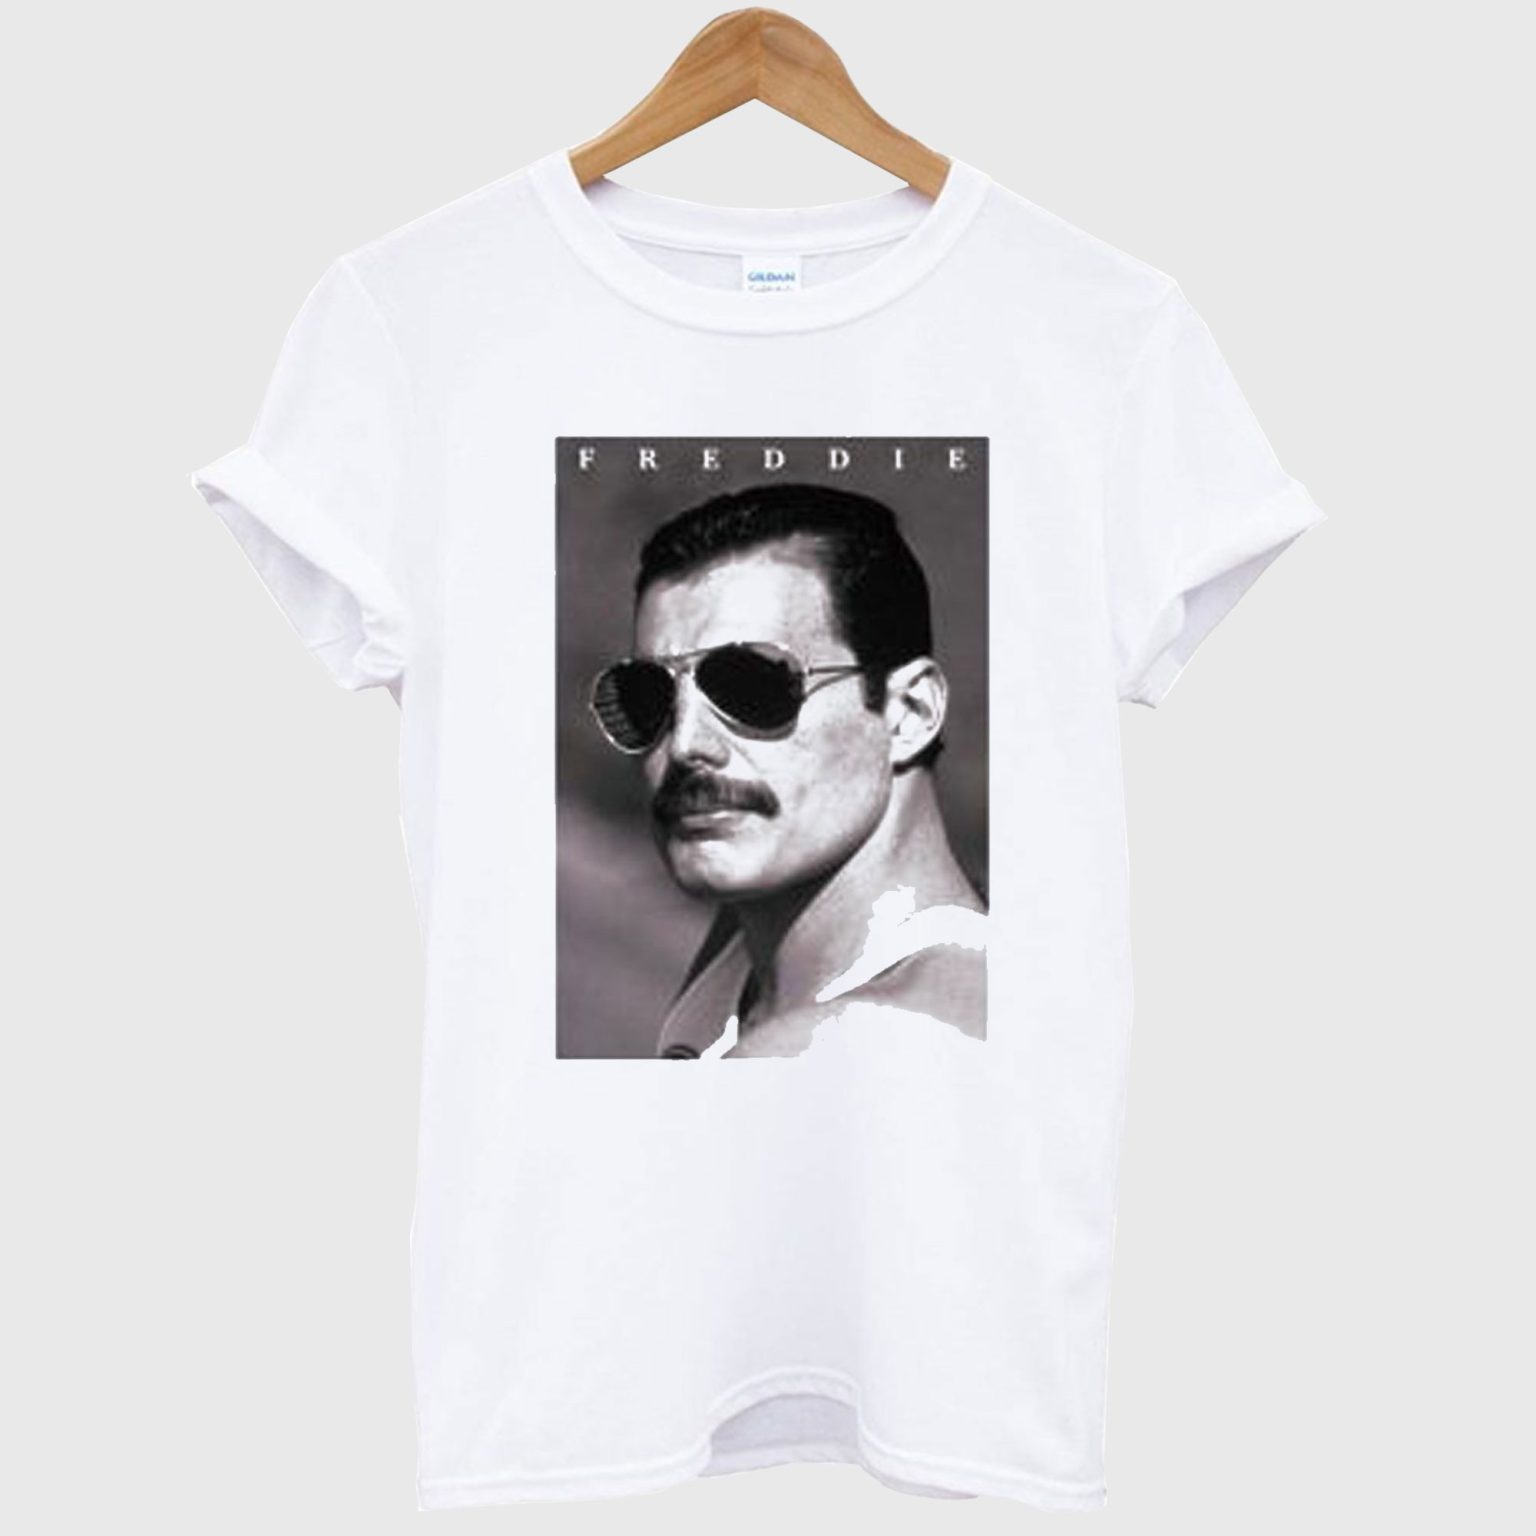 Queen Freddie Mercury Tribute T shirt